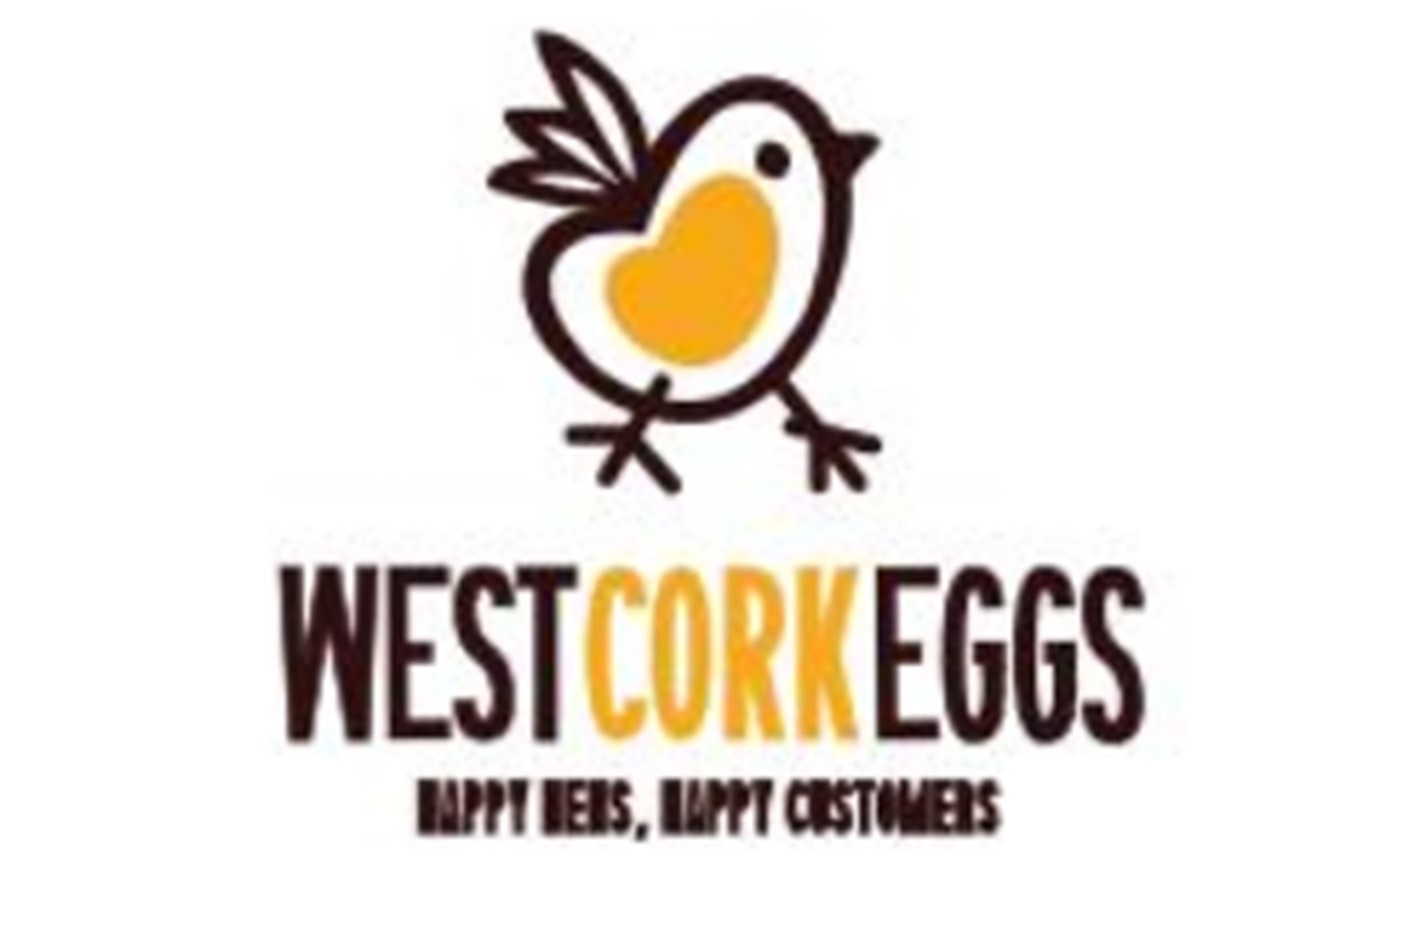 West Cork Eggs Ltd